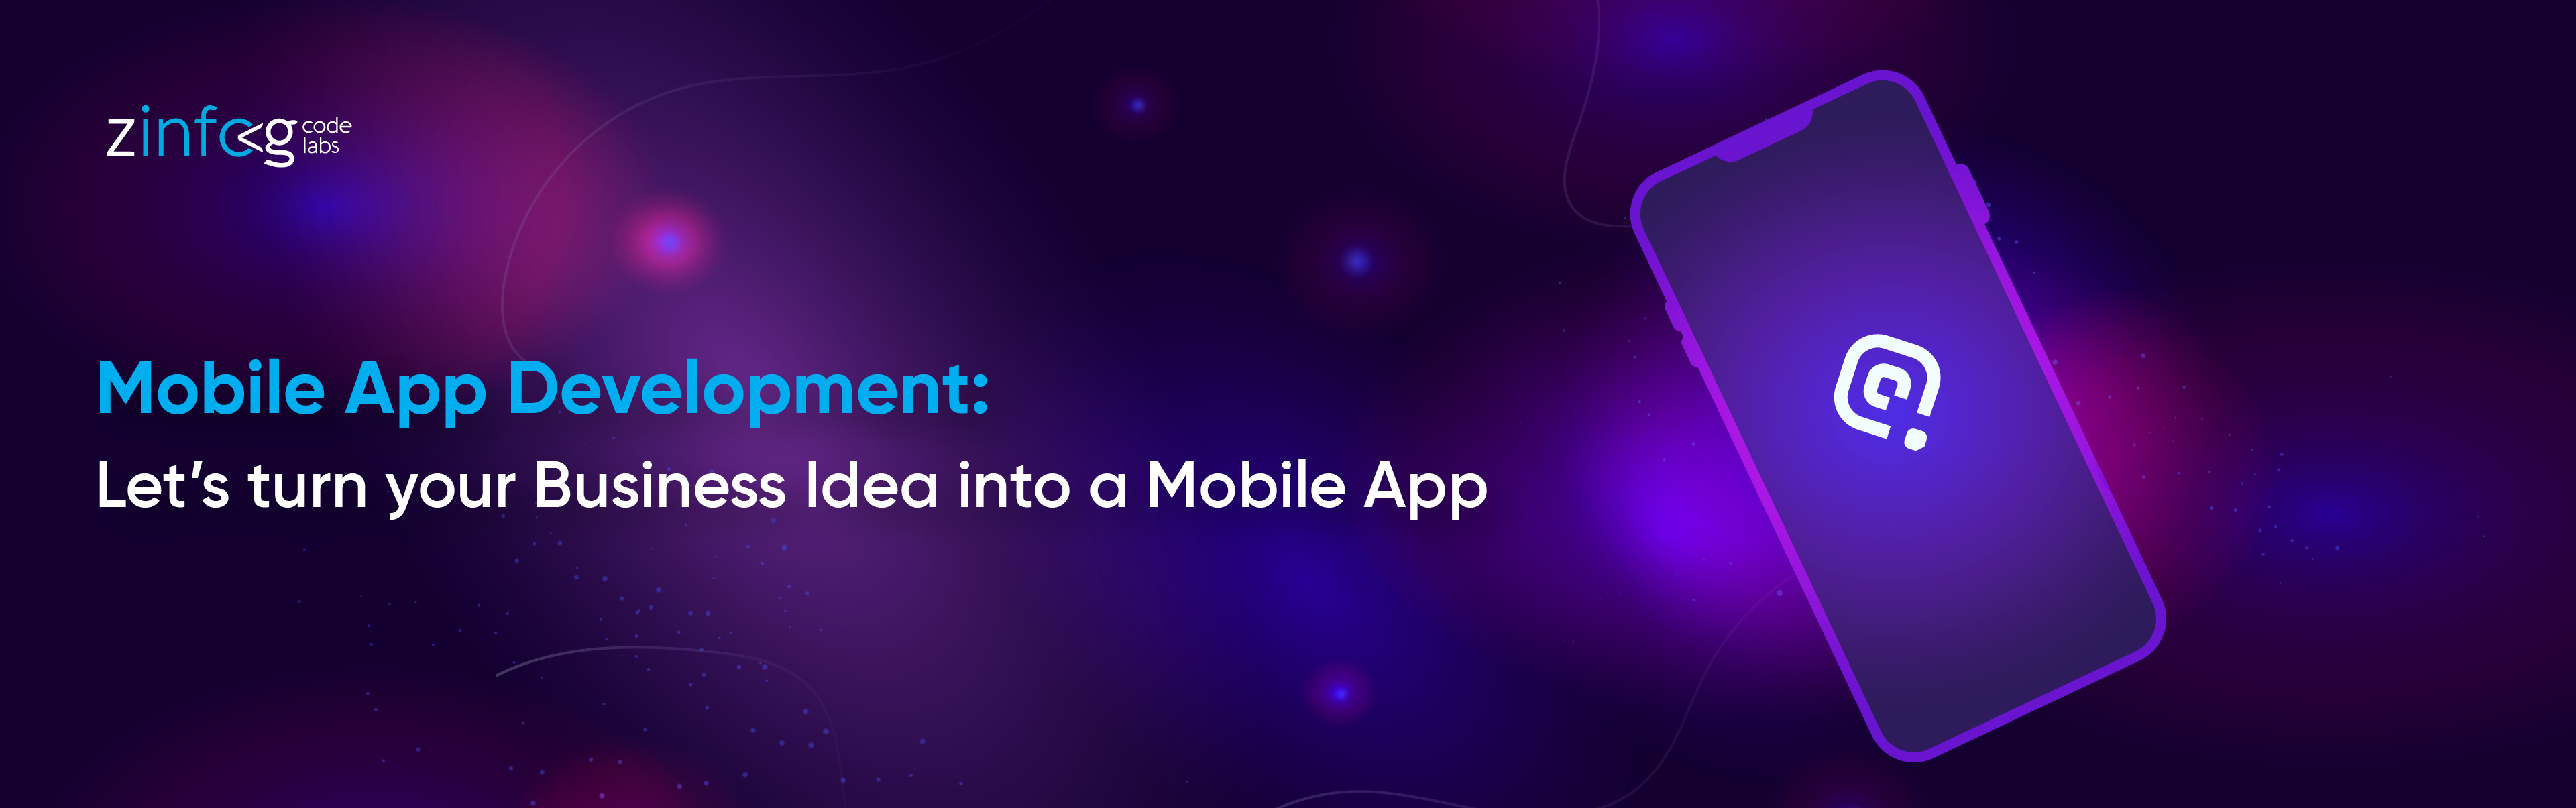 mobile-app-development-lets-turn-your-business-idea-into-a-mobile-app.html